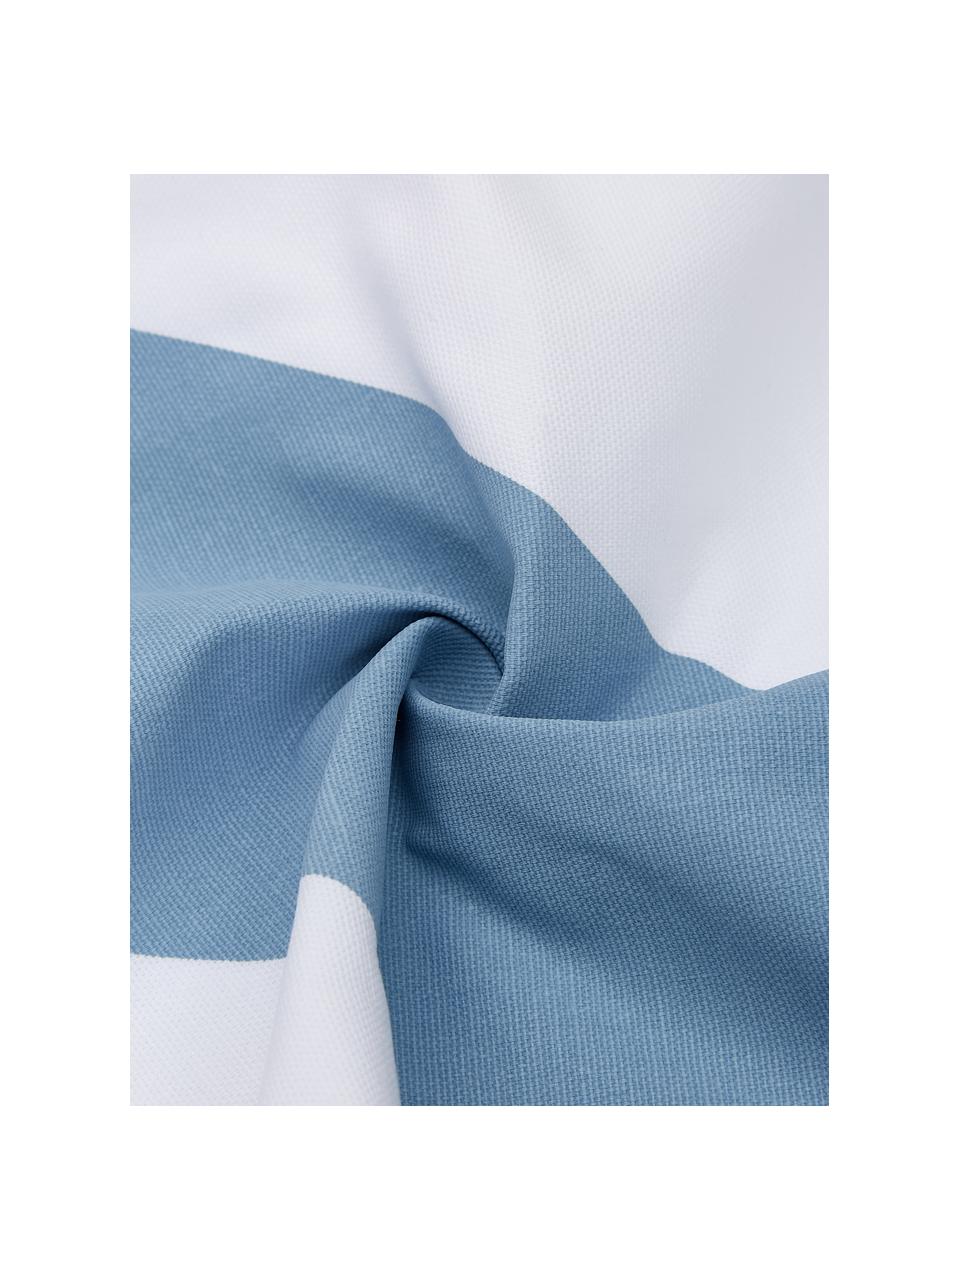 Gestreepte kussenhoes Ren in lichtblauw/wit, 100% katoen, Wit, lichtblauw, 30 x 50 cm